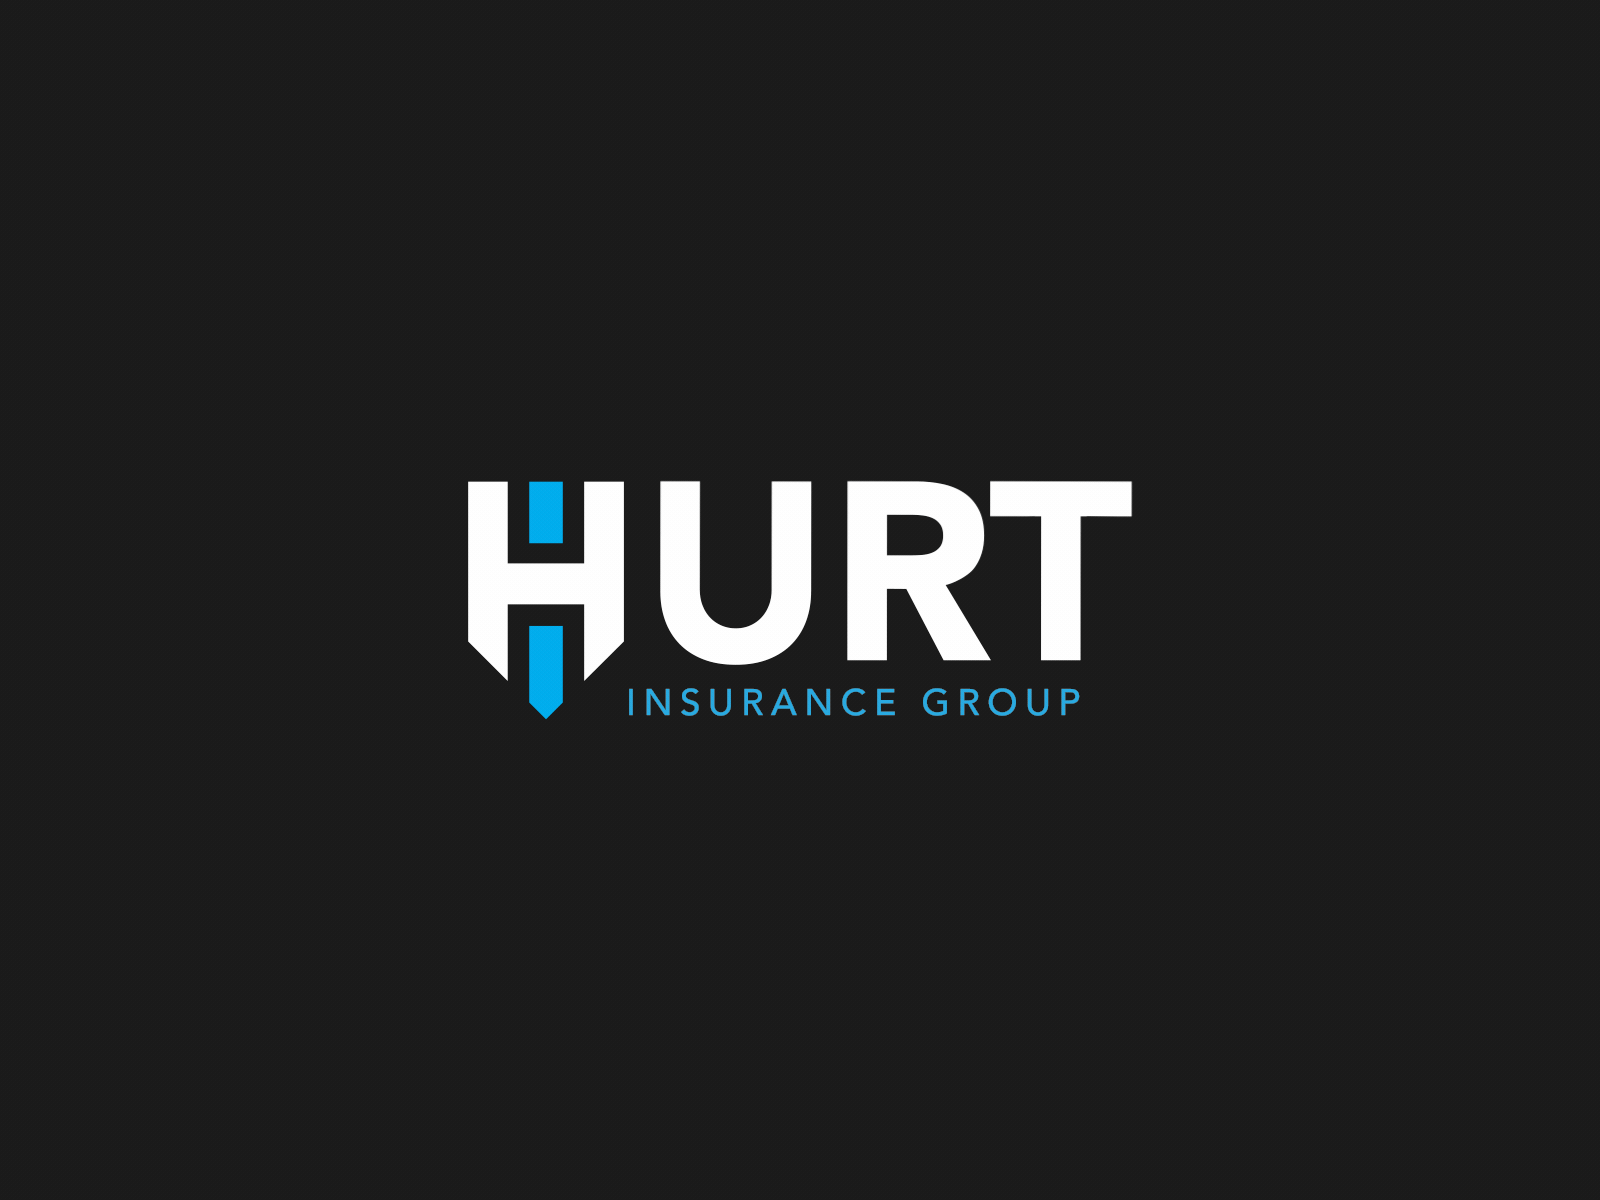 Hurt Logo Animation